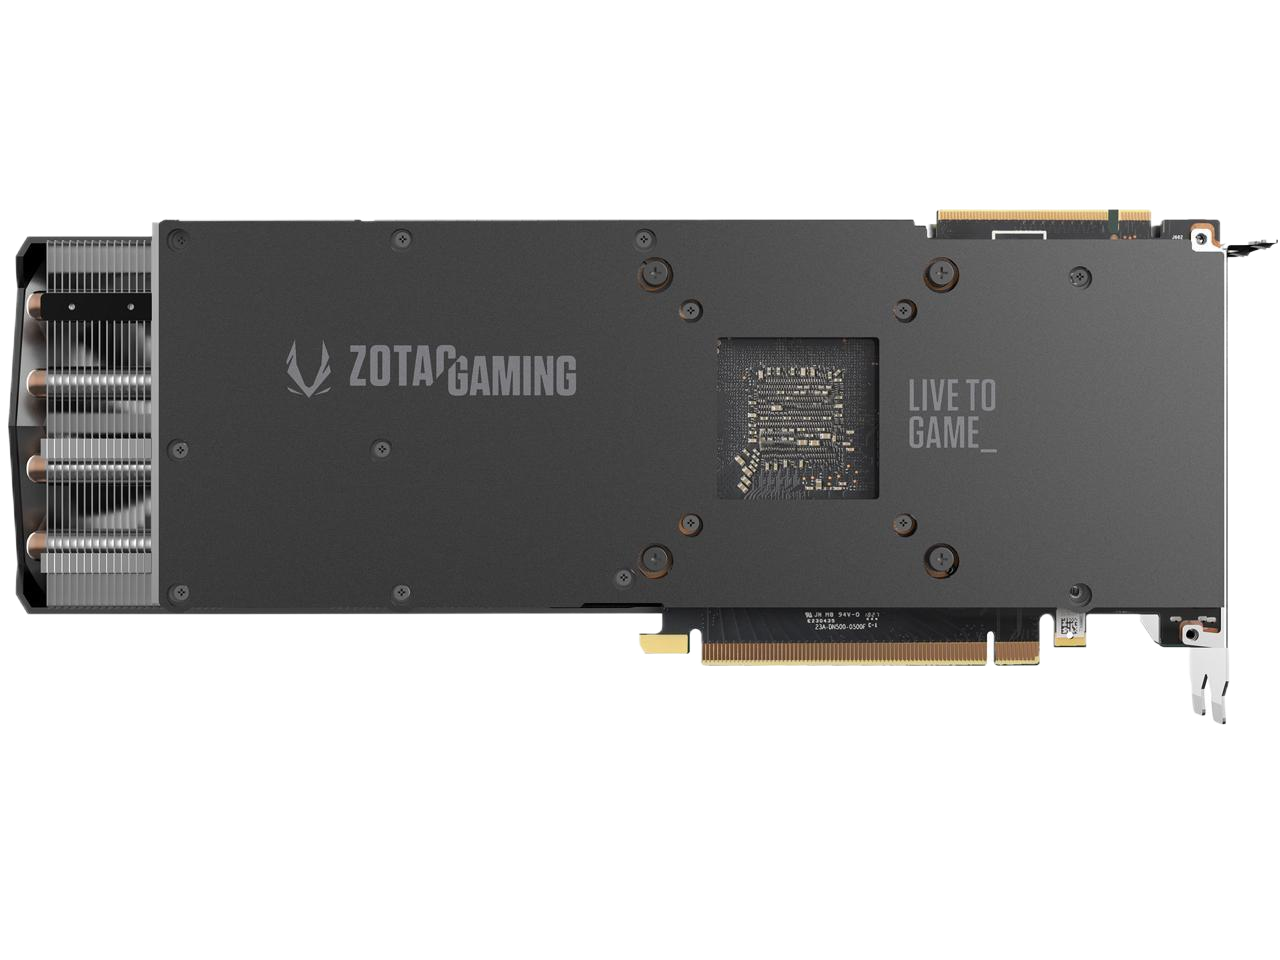 ZOTAC GAMING GeForce RTX 2080 Ti Triple Fan 11GB GDDR6 352-bit Active Fan Control Metal Backplate Spectra Lighting Gaming Graphics Card ZT-T20810F-10P